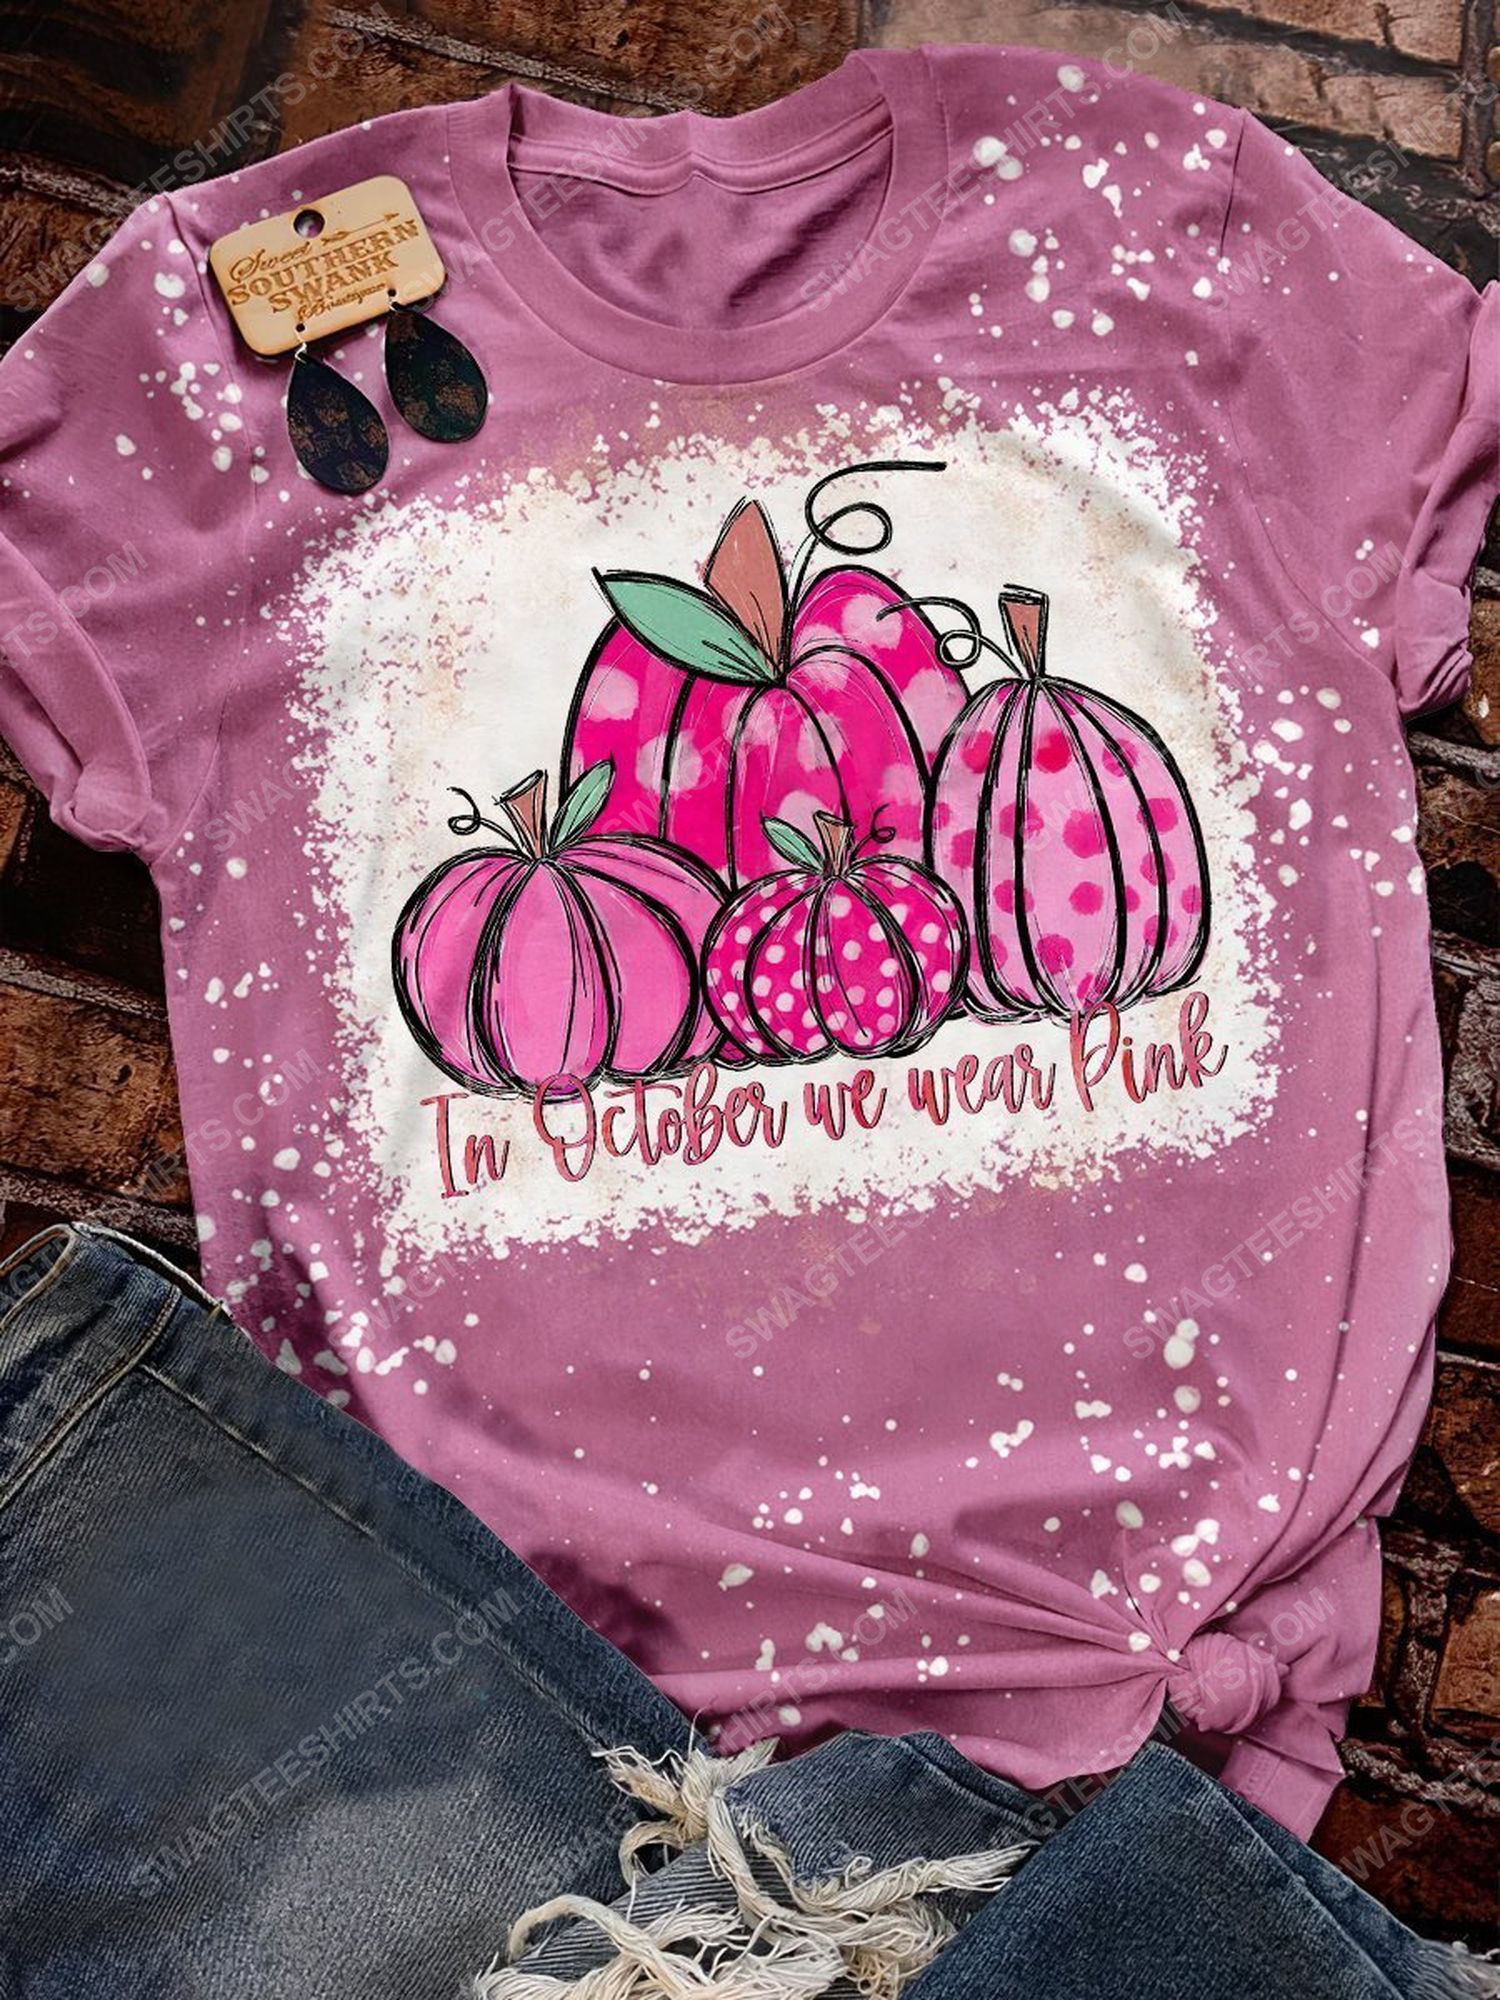 Breast cancer awareness in october we wear pink pumpkins bleached shirt